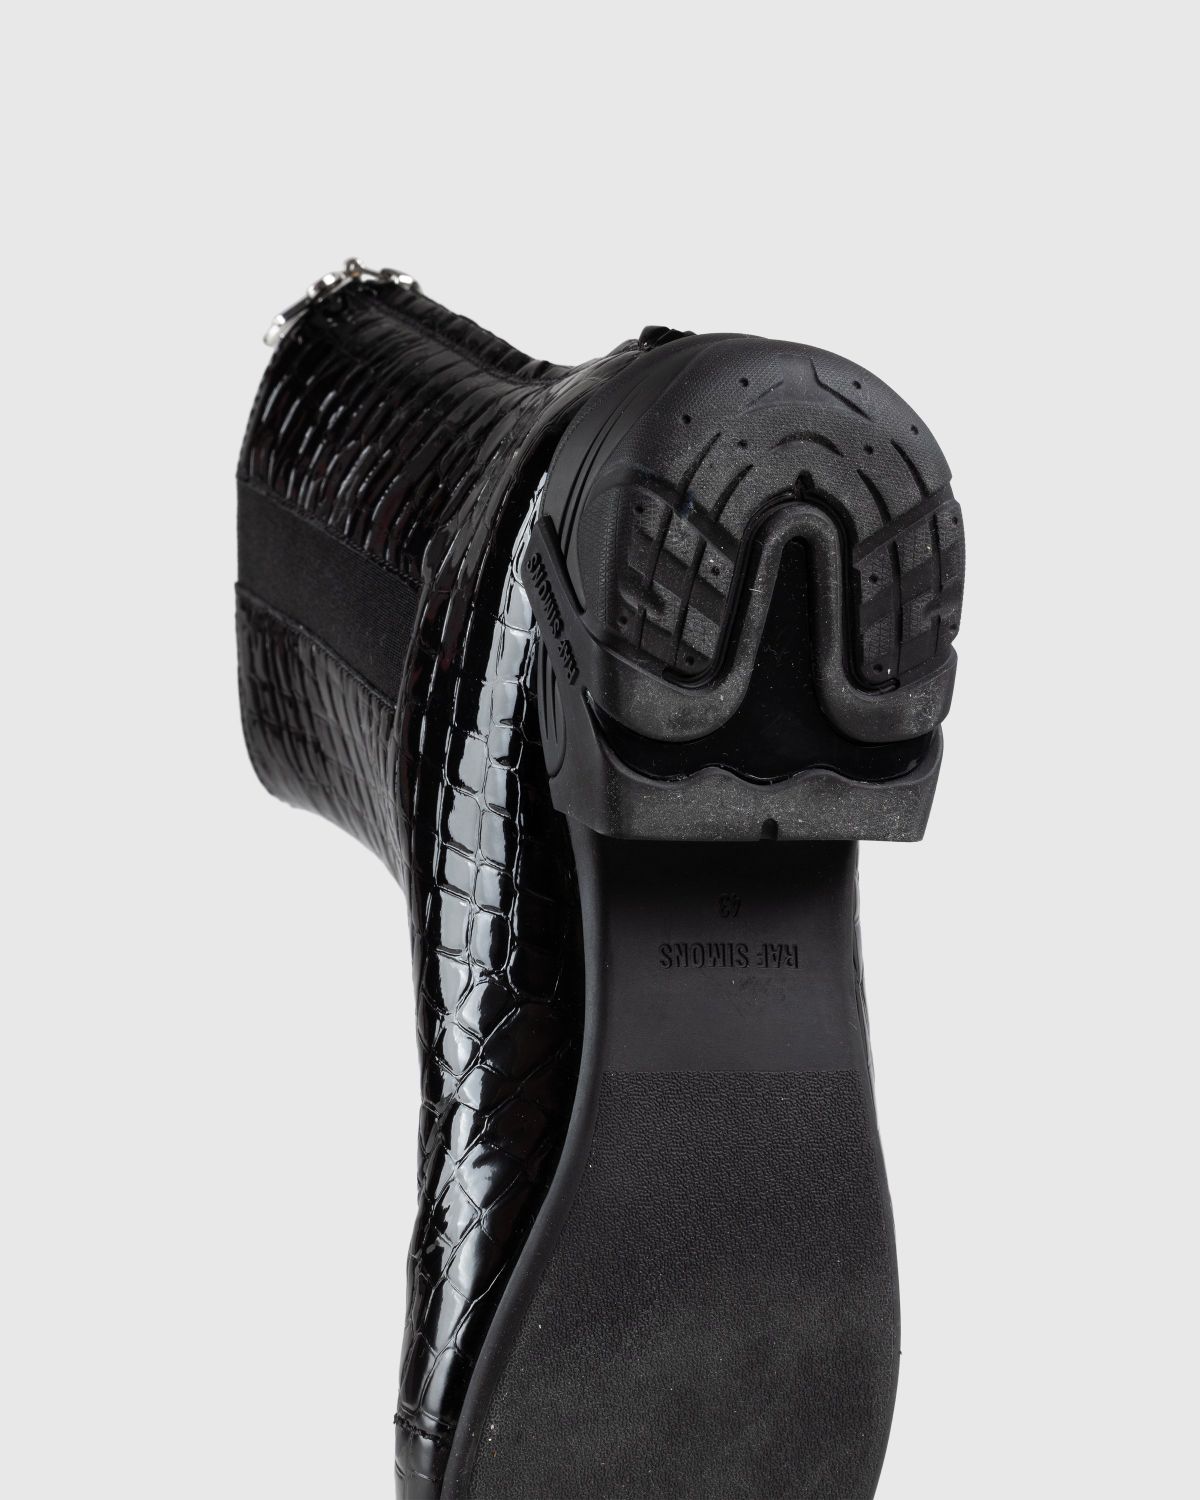 Raf Simons – Solaris High Leather Boot Black Croc - Boots - Black - Image 6